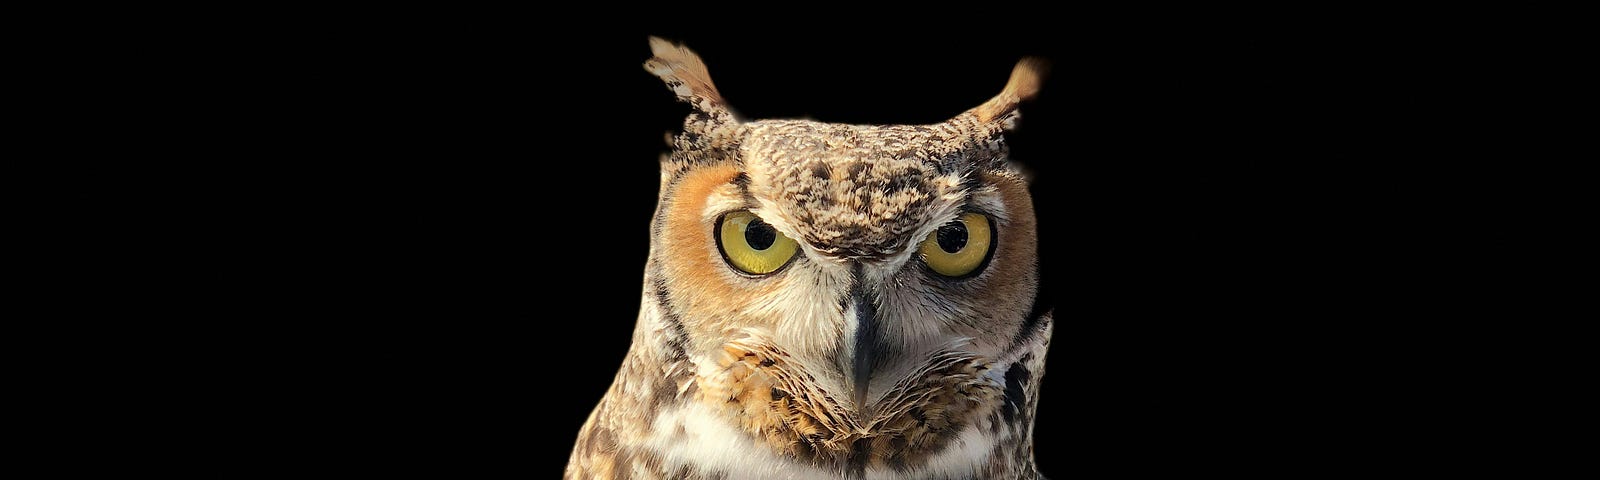 A beautiful owl